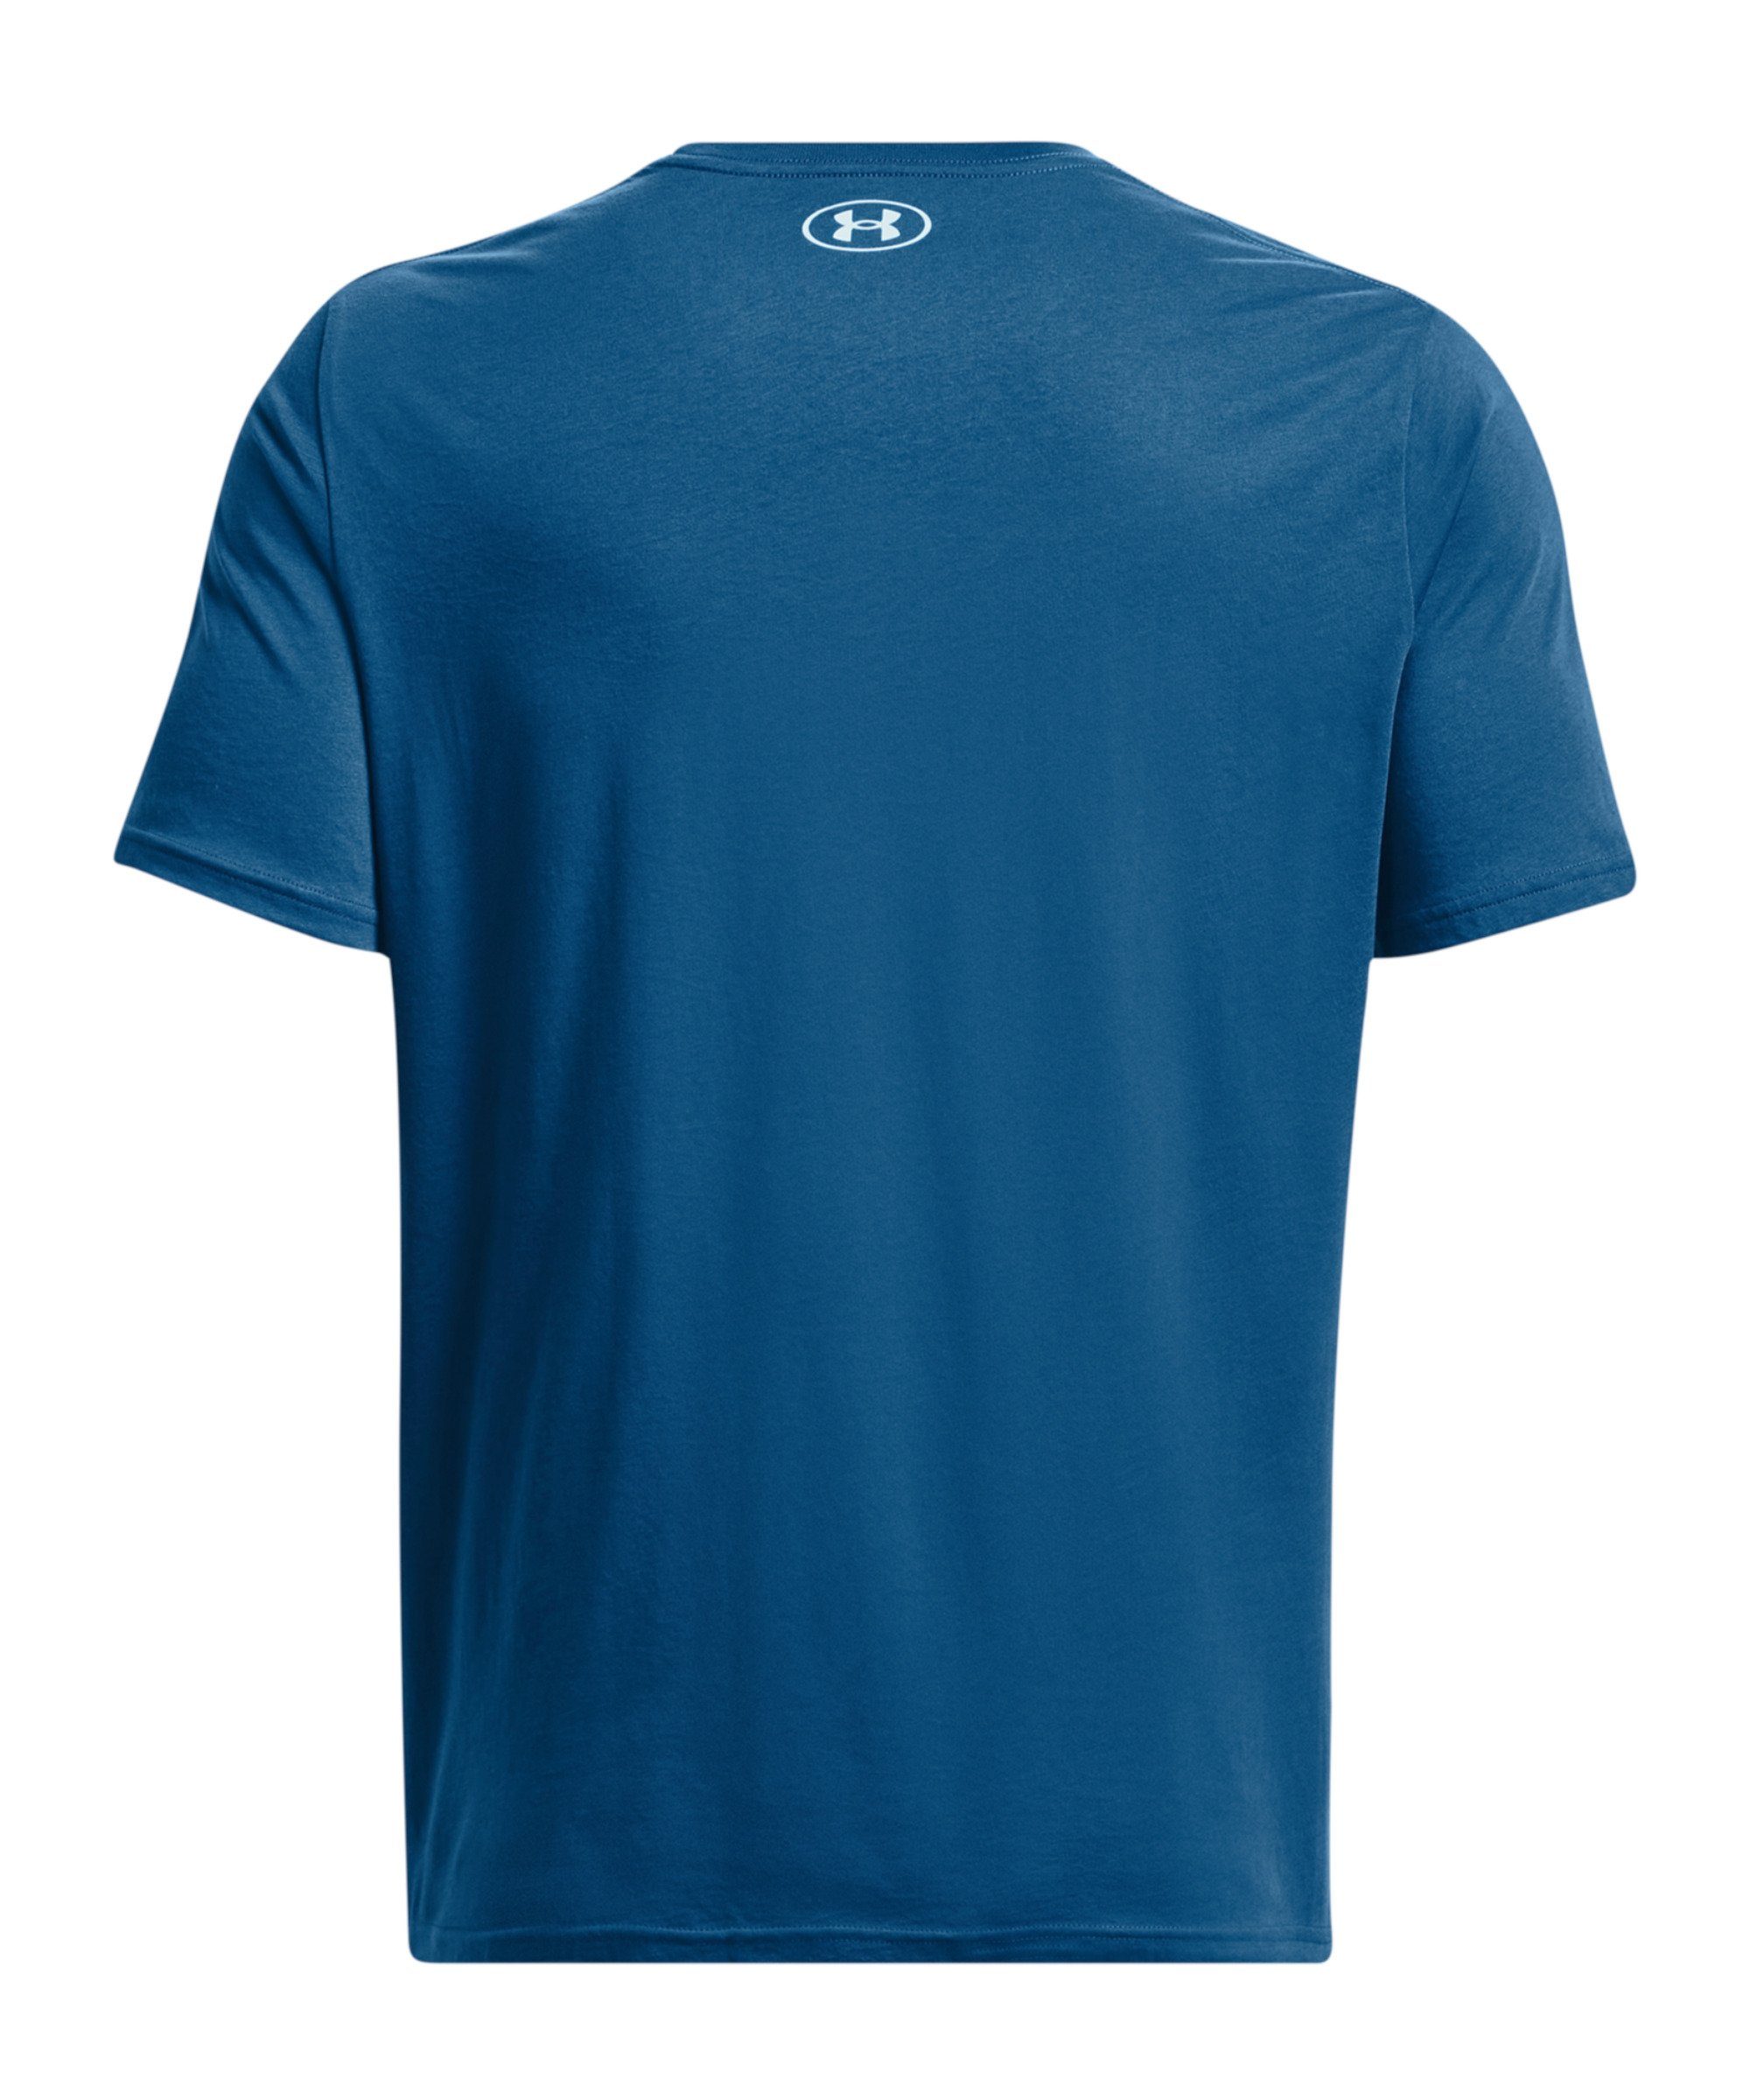 Under Armour® T-Shirt Team Issue blau Wordmark T-Shirt default